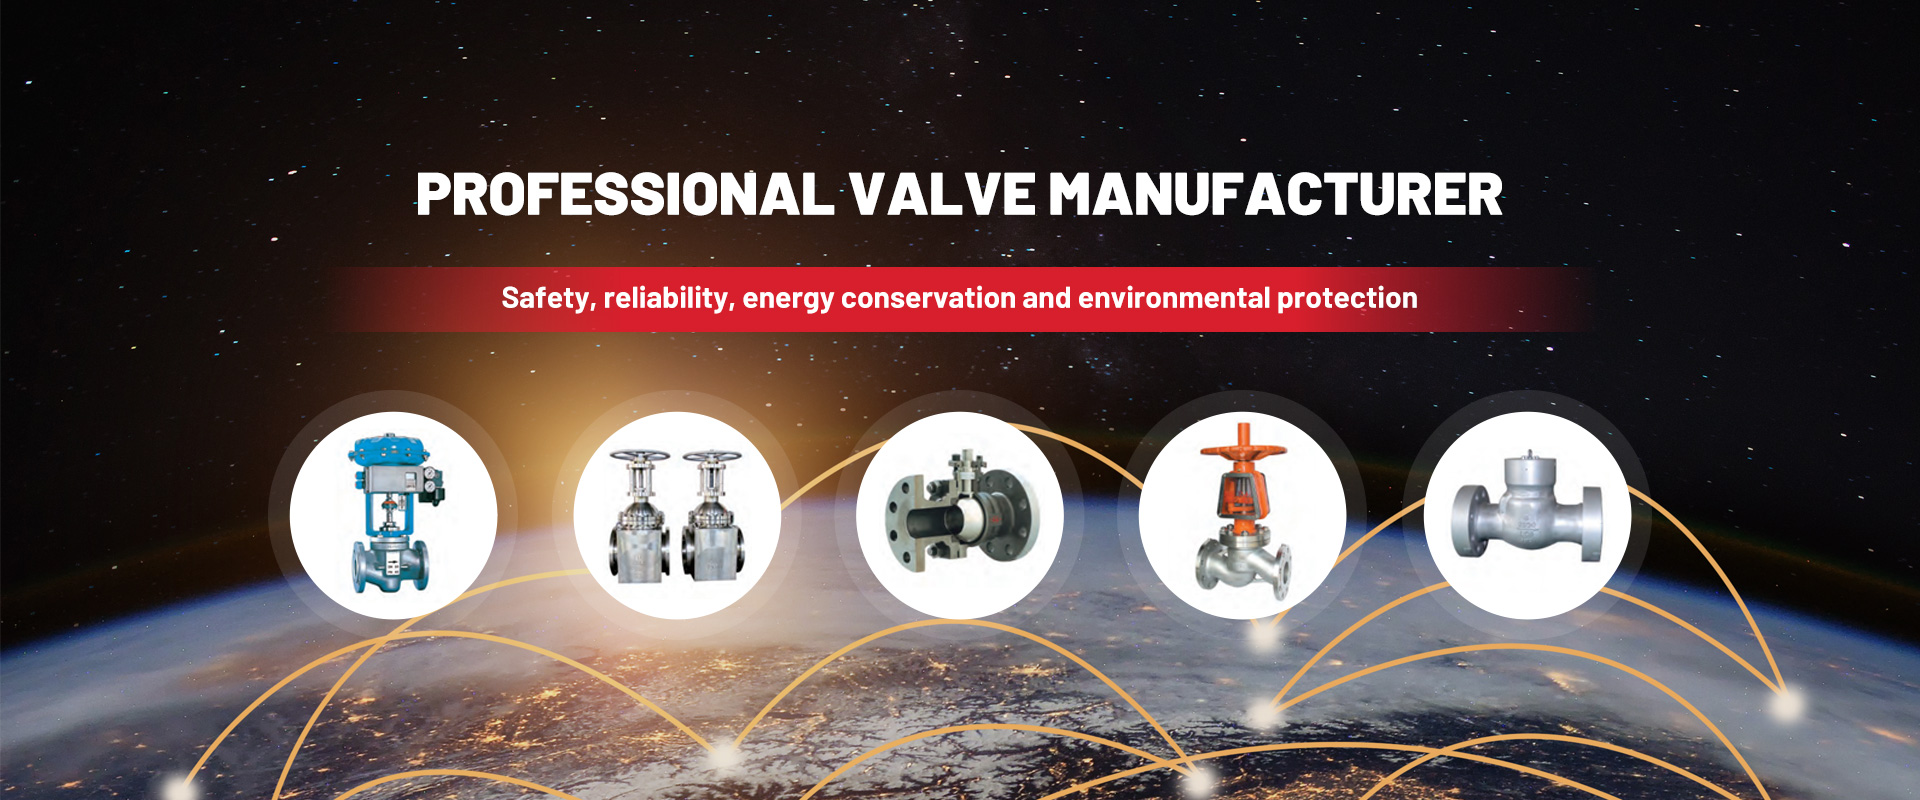 Professional valve manufacturer